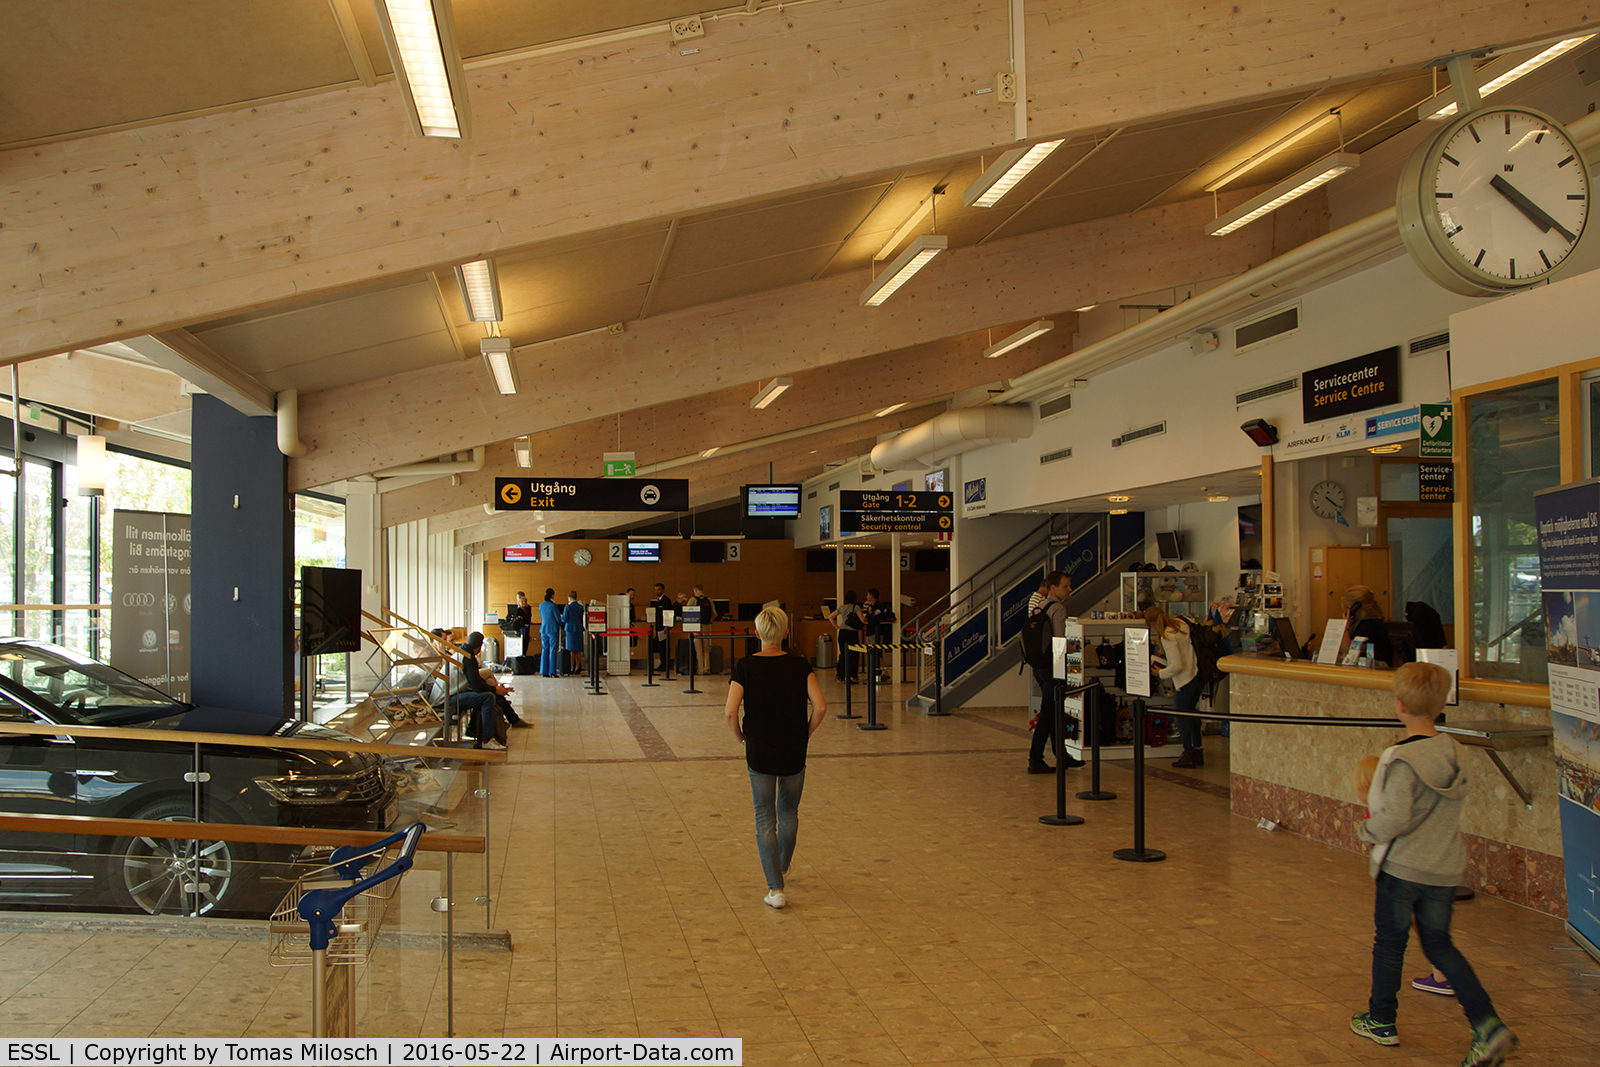 Linköping-Saab Airport, Linköping Sweden (ESSL) - Inside the terminal at Linköping City Airport